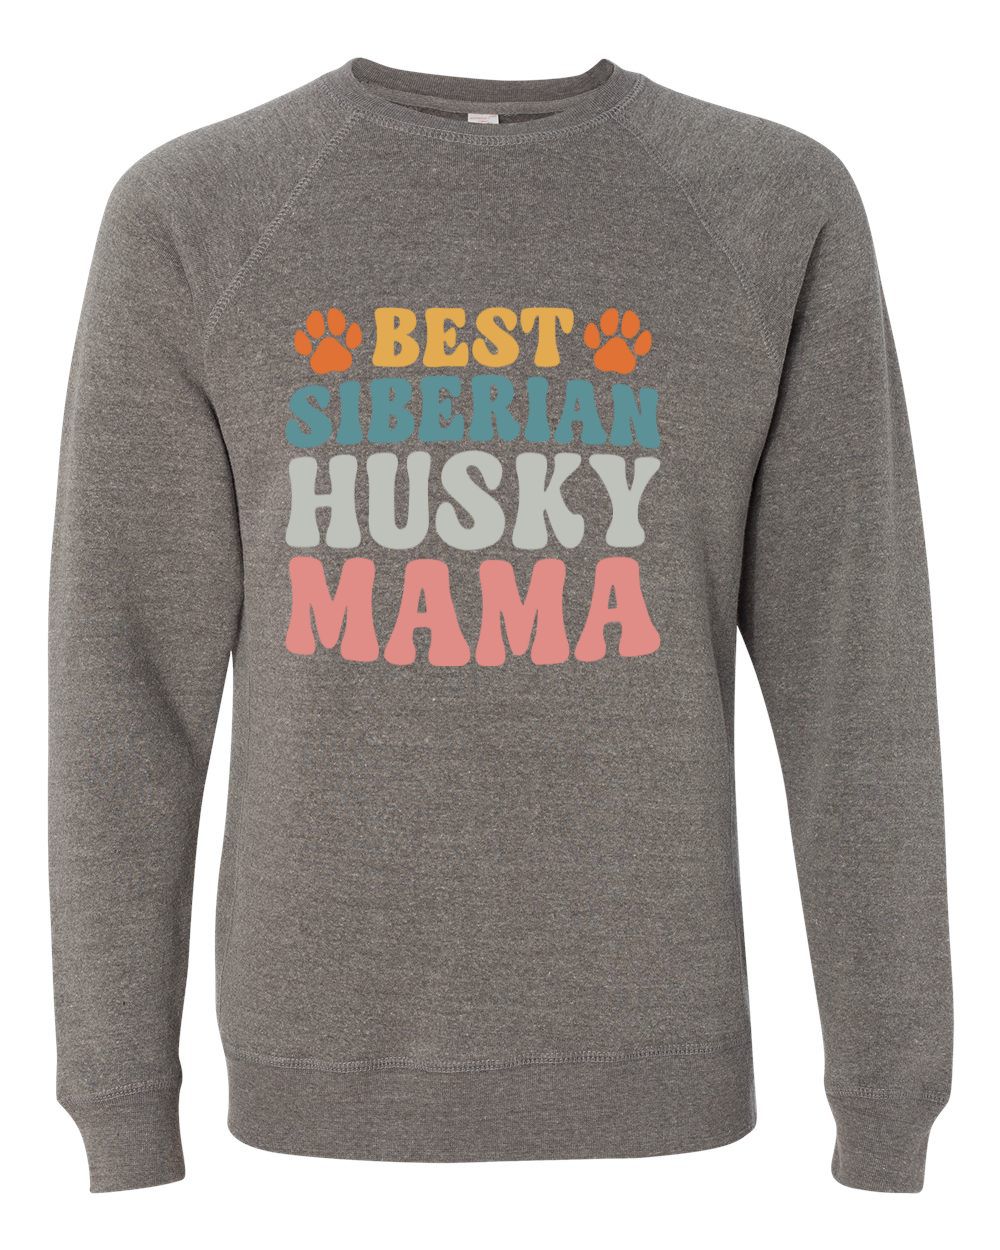 Best Siberian Husky Mama Colored Print Sweatshirt